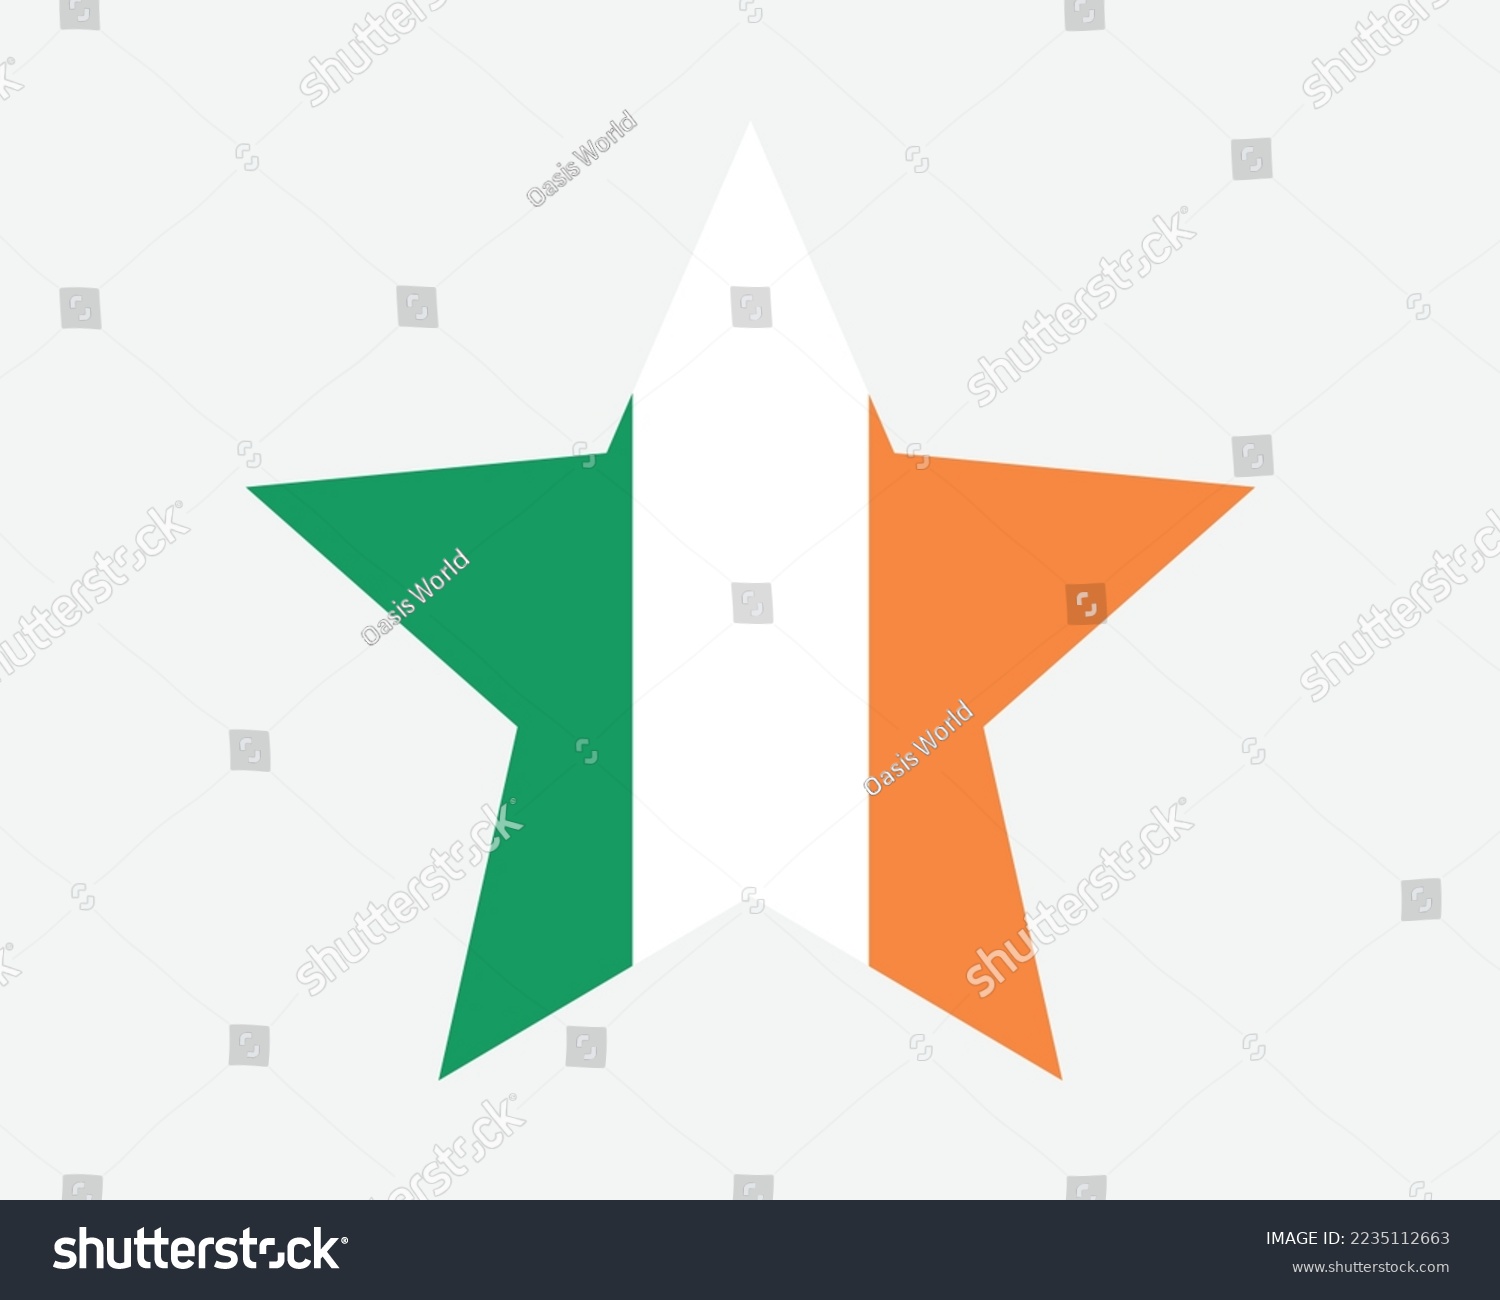 SVG of Ireland Star Flag. Irish Star Shape Flag. Republic of Ireland Country National Banner Icon Symbol Vector Flat Artwork Graphic Illustration svg